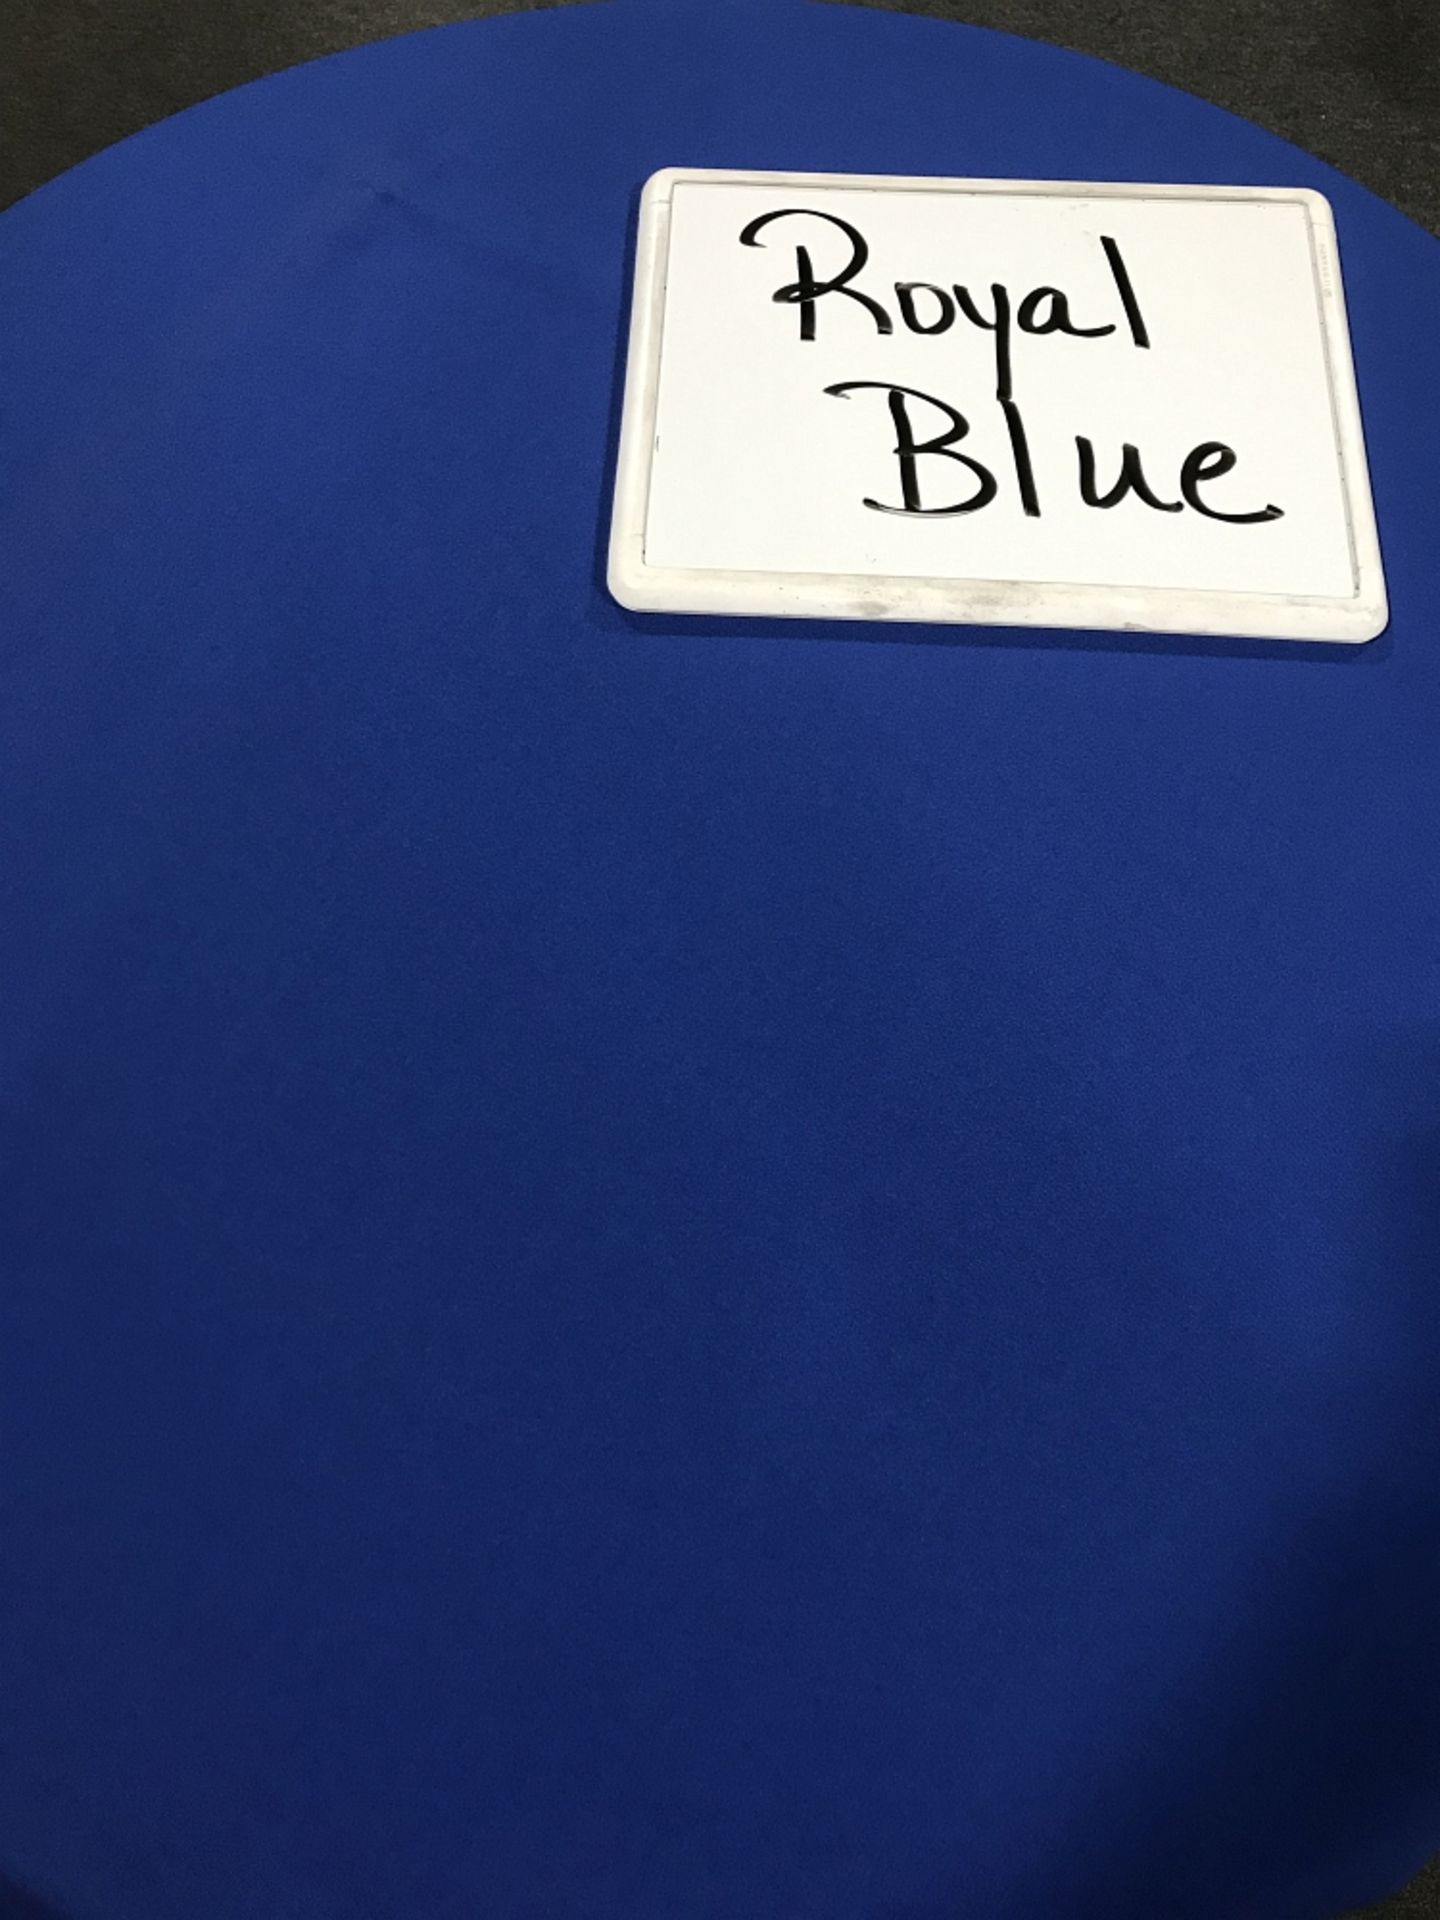 60" X 120" Royal Blue Rectangle Banquet Linen